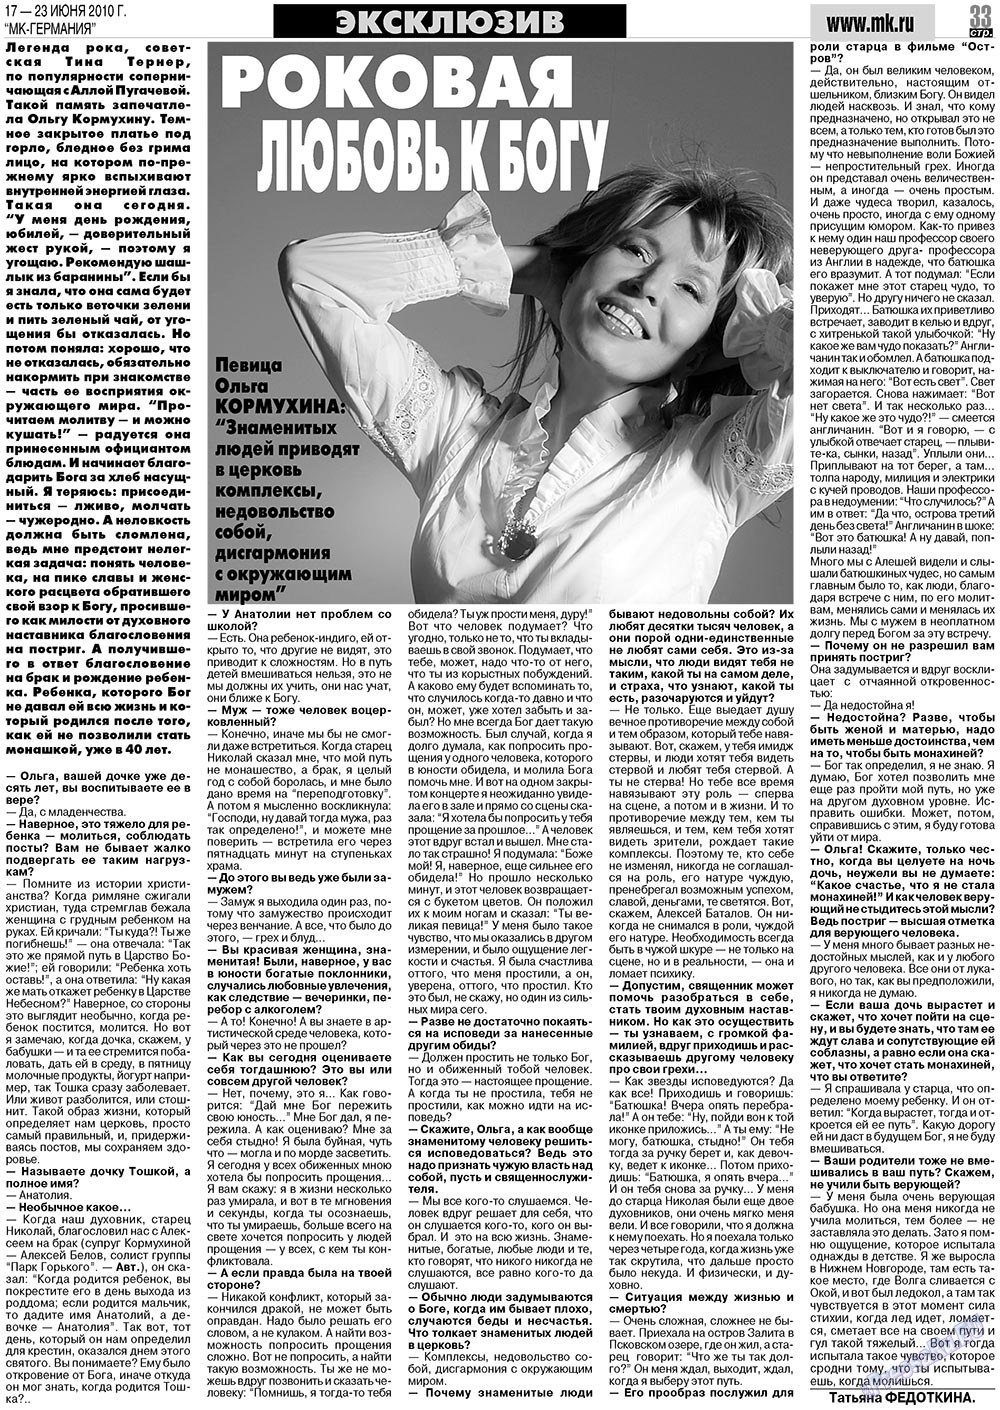 МК-Германия, газета. 2010 №25 стр.33